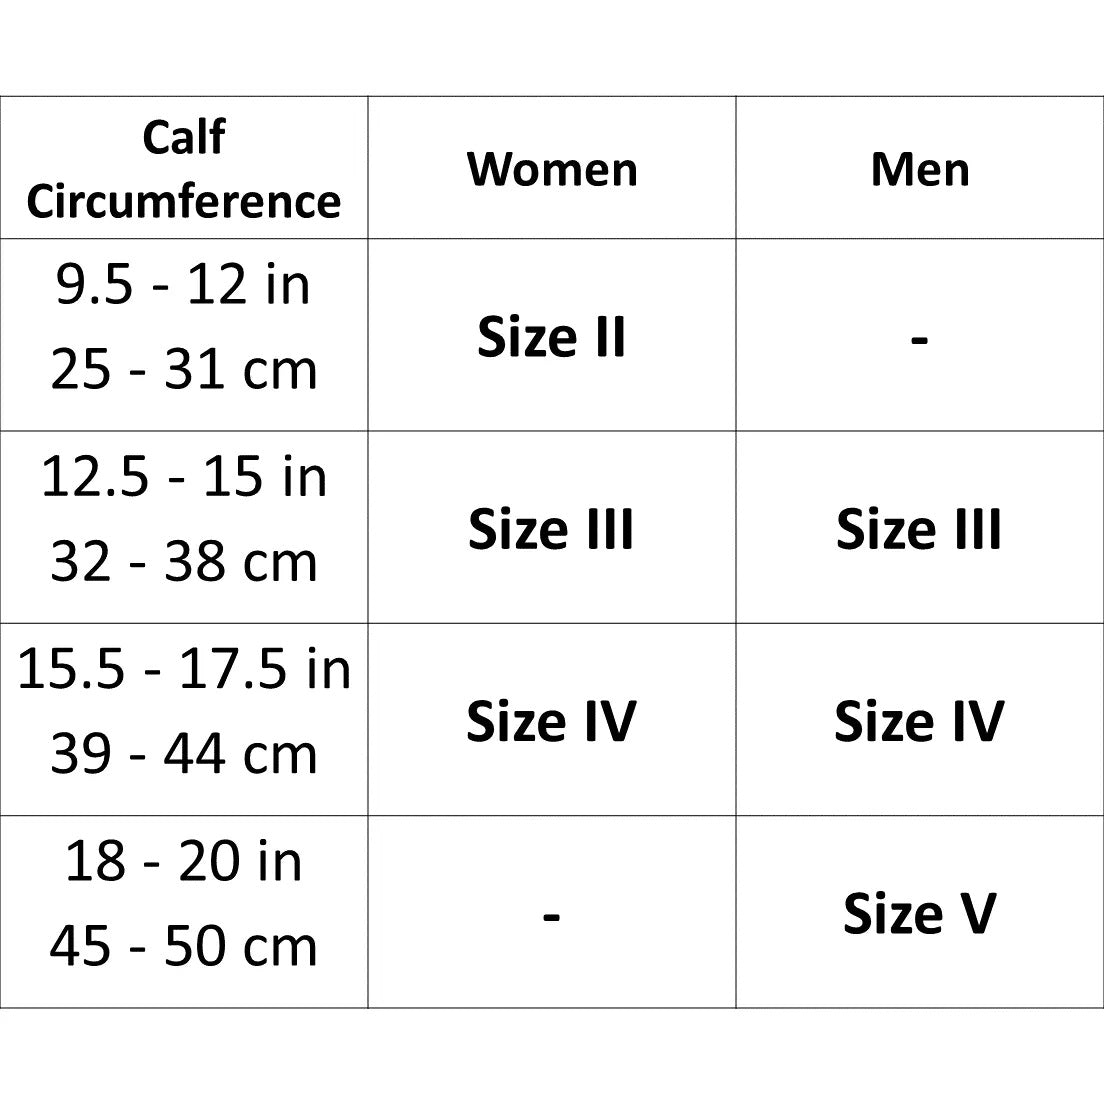 Men Business CEP Knee High 20-30 mmHg Compression Socks